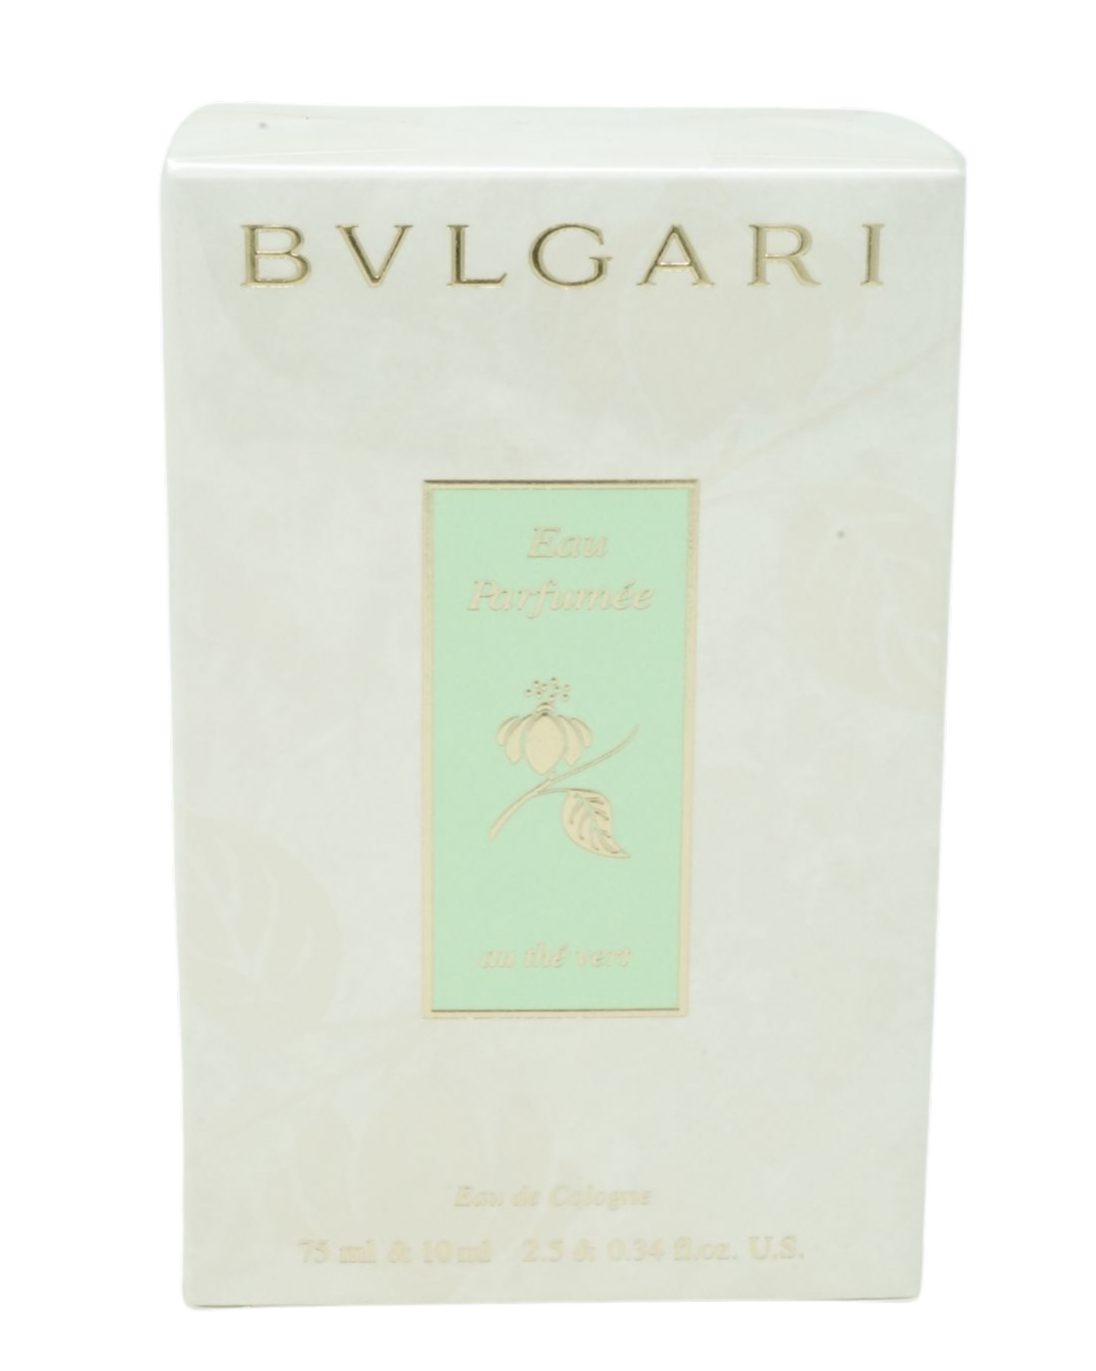 BVLGARI Parfumee the vert Cologne de de Bvlgari 10ml Cologne Eau & au Eau 75ml Eau